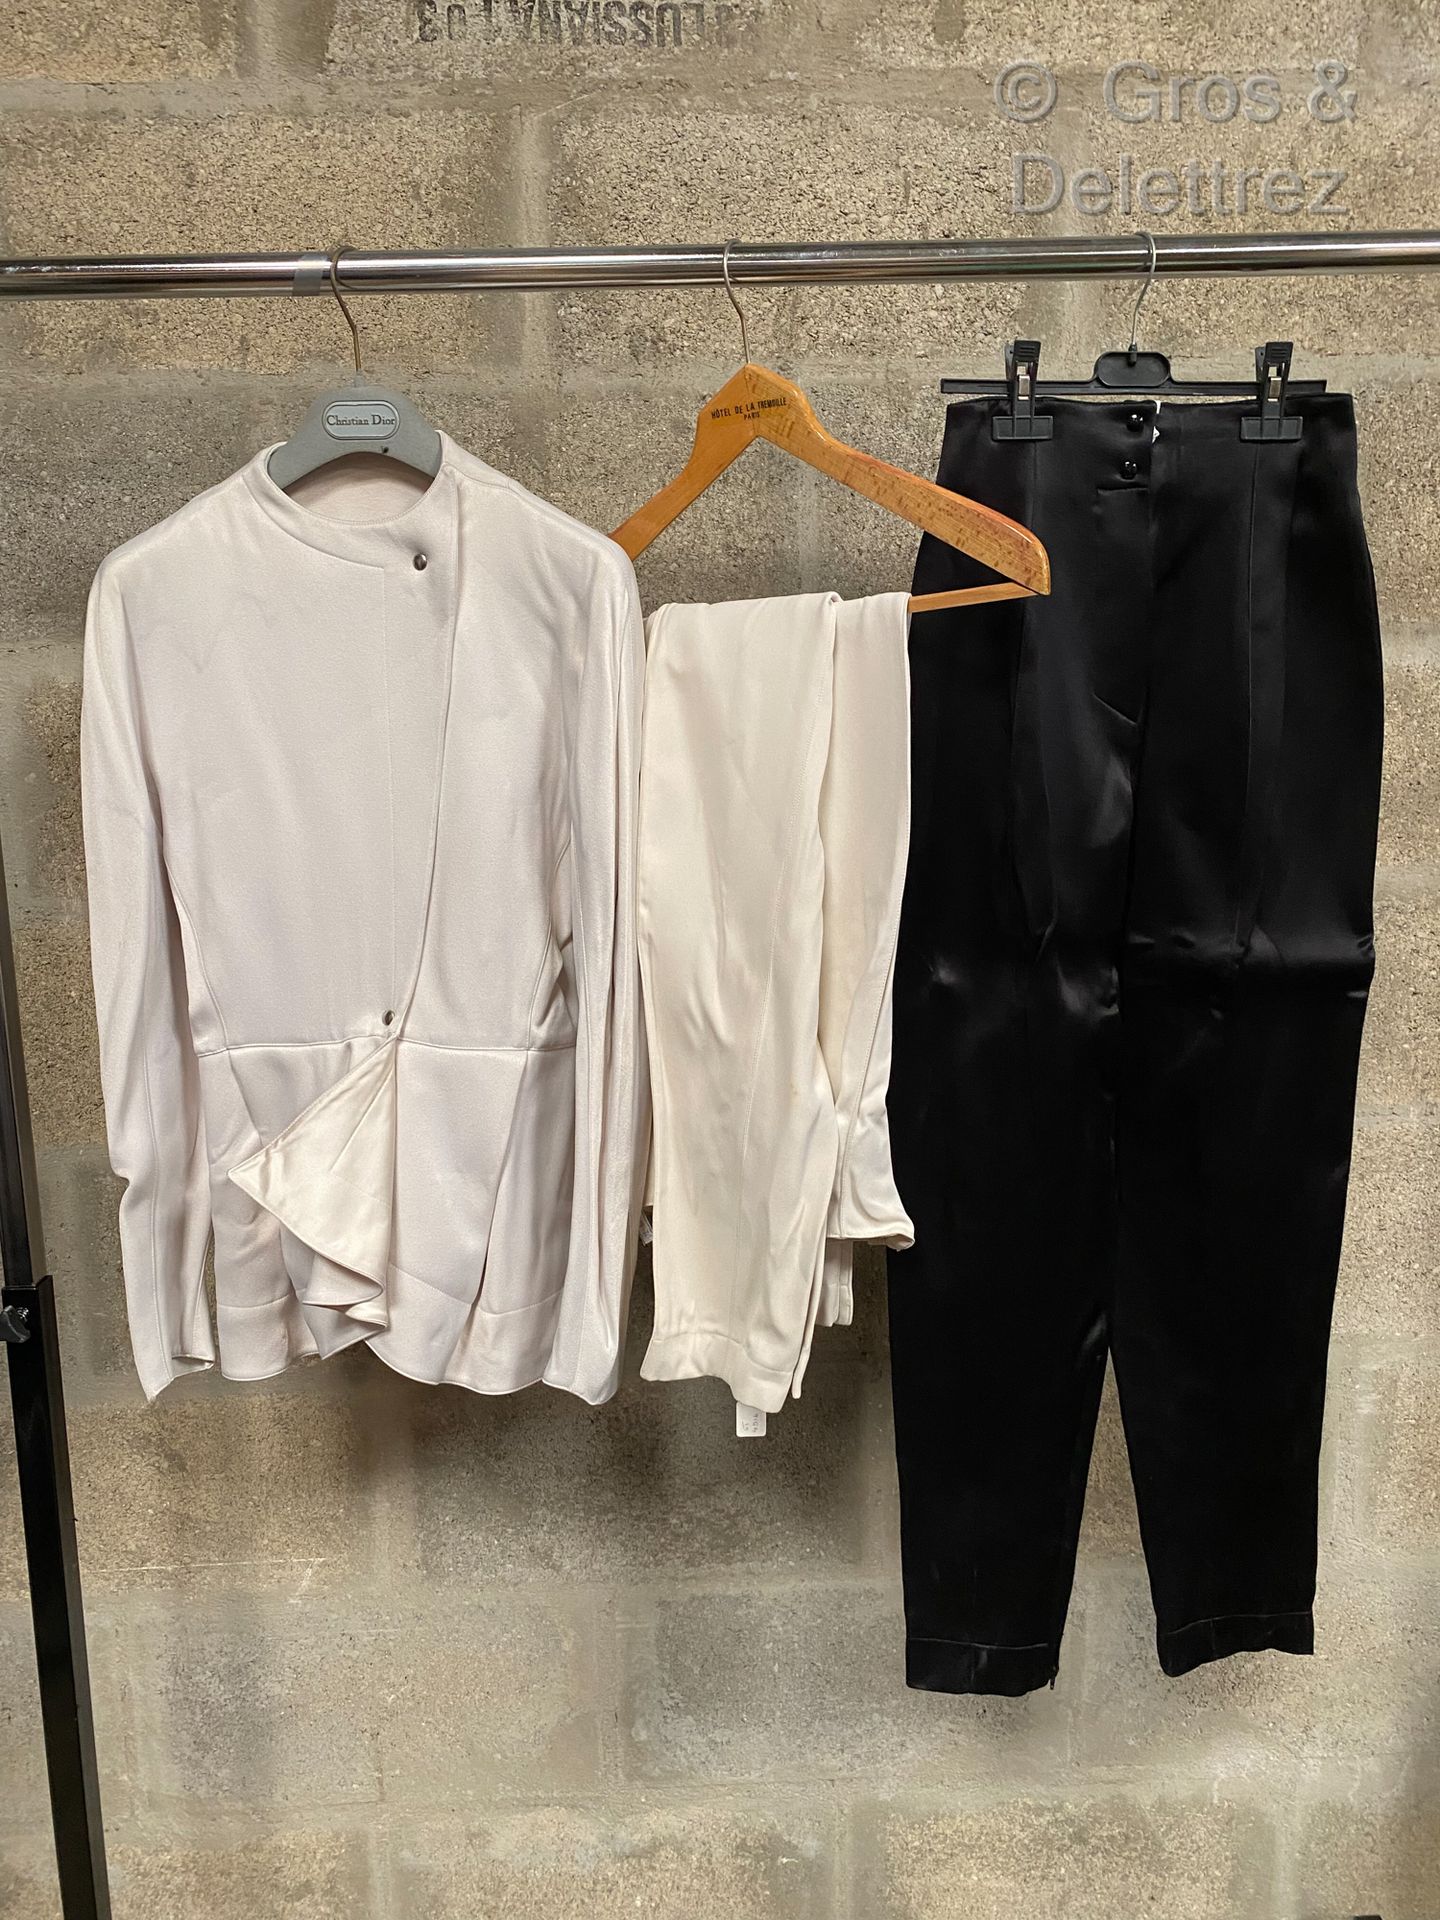 Null 
克劳德-蒙塔纳

拍品包括一件白色外套和两条白色长裤以及一条黑色长裤（污渍）。

我们附上一条白色连衣裙，一条黑色裙子和一条黑白相间的皮带（污渍，小&hellip;